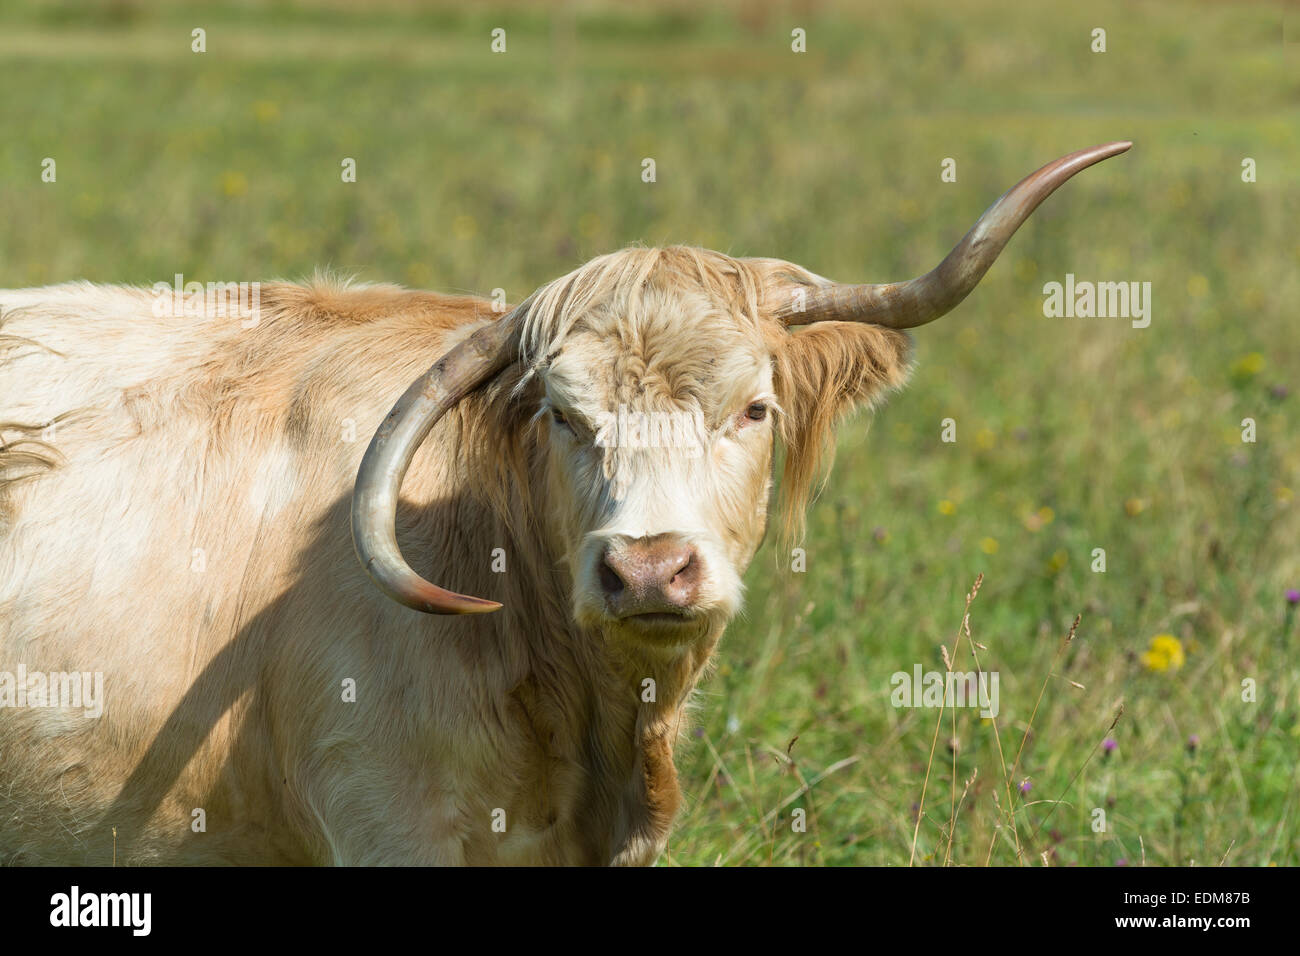 white highland cattle / calf Stock Photo